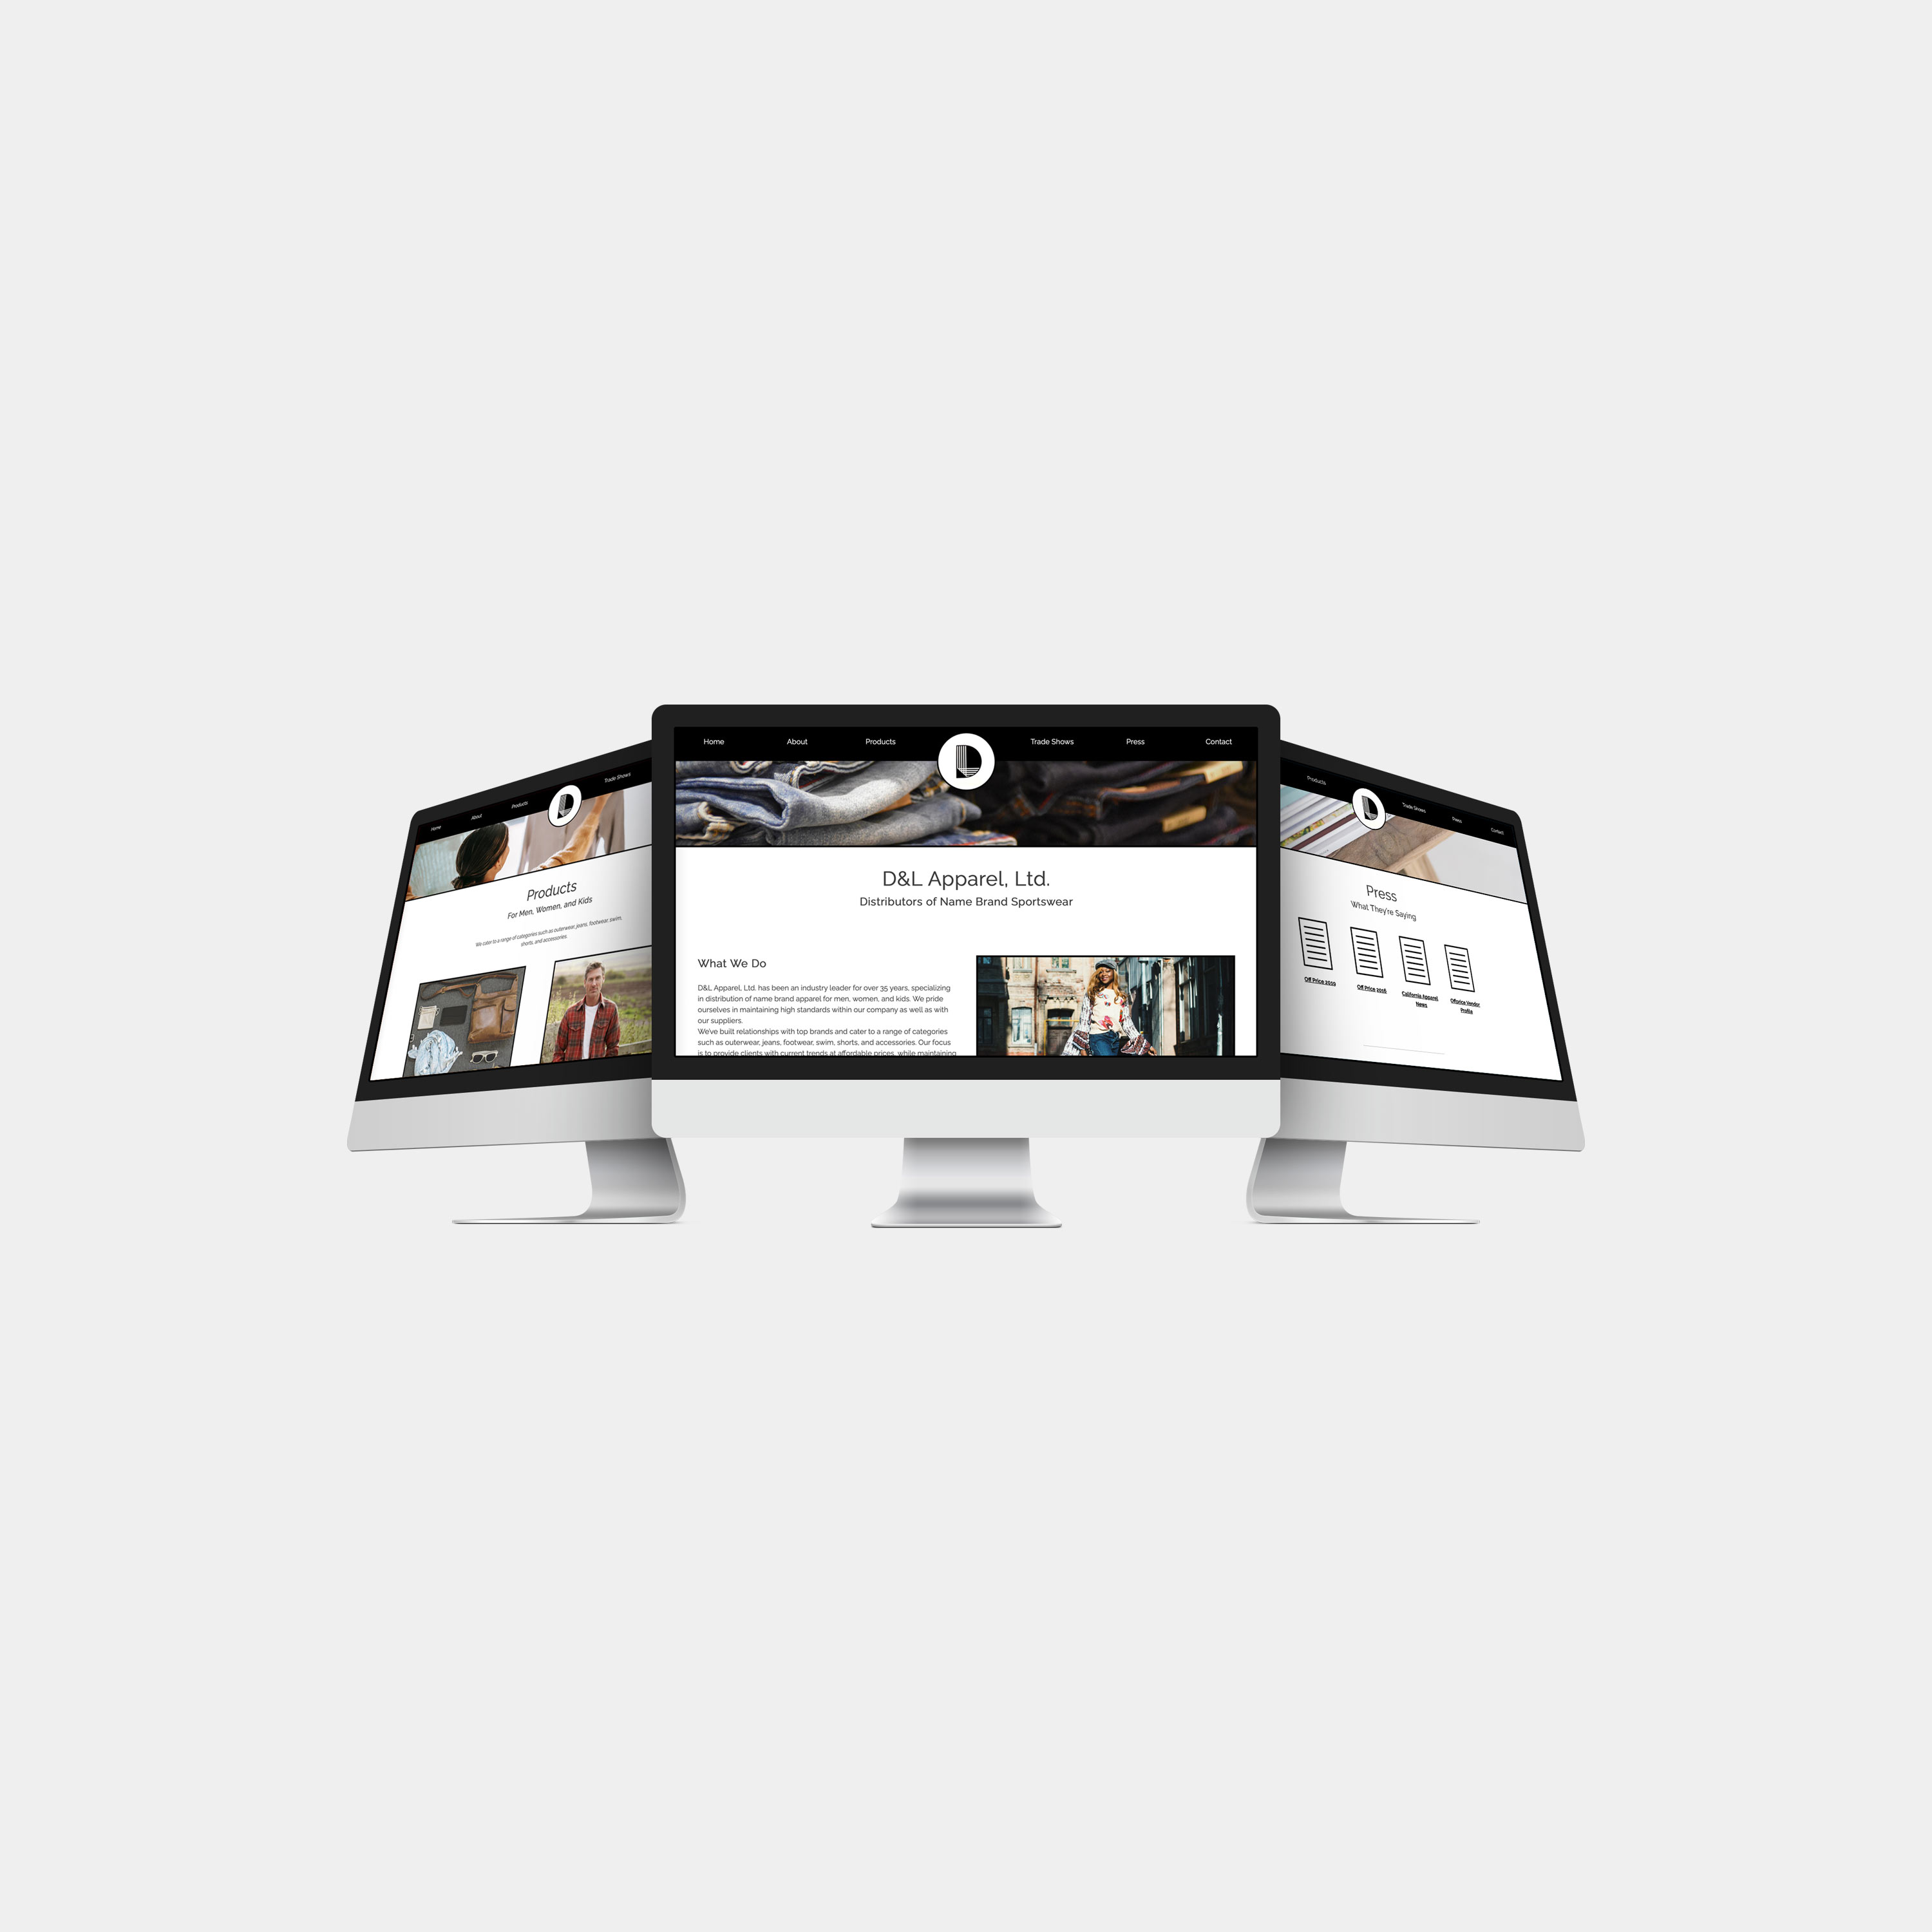 Website design and development for D&L Apparel, Ltd